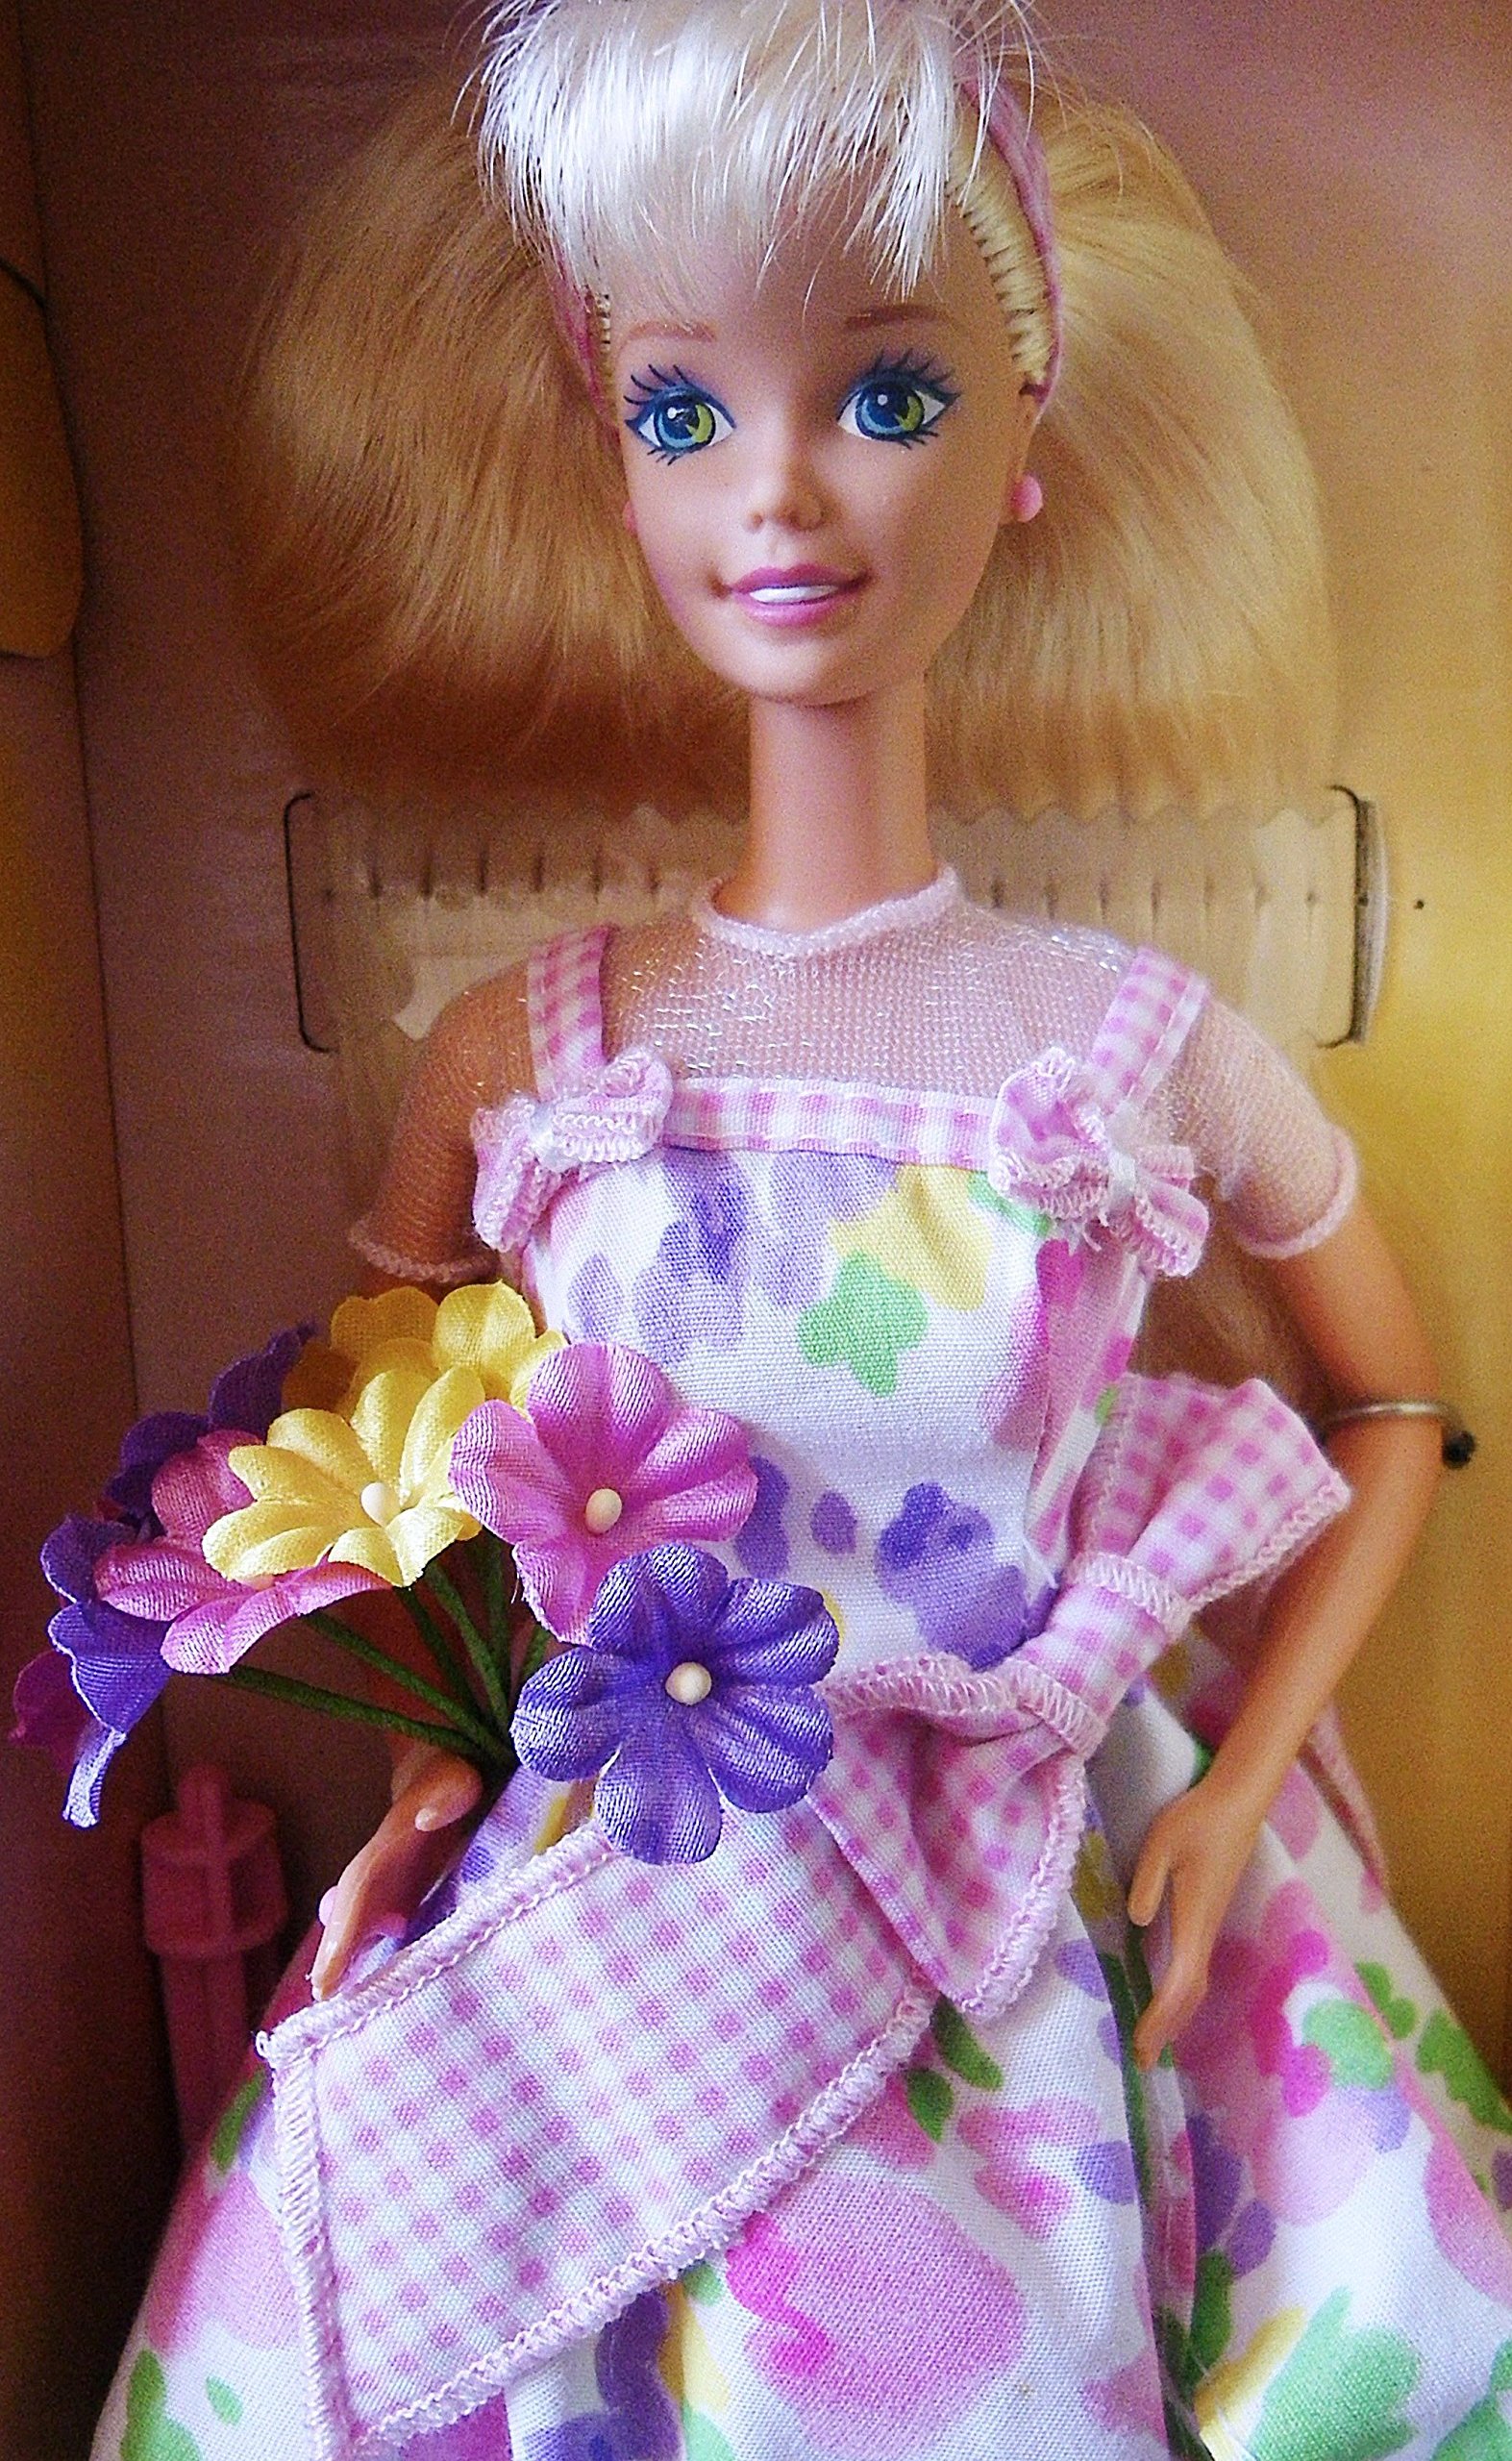 Mattel Avon Special Edition Spring Petals Barbie Doll Second in Series